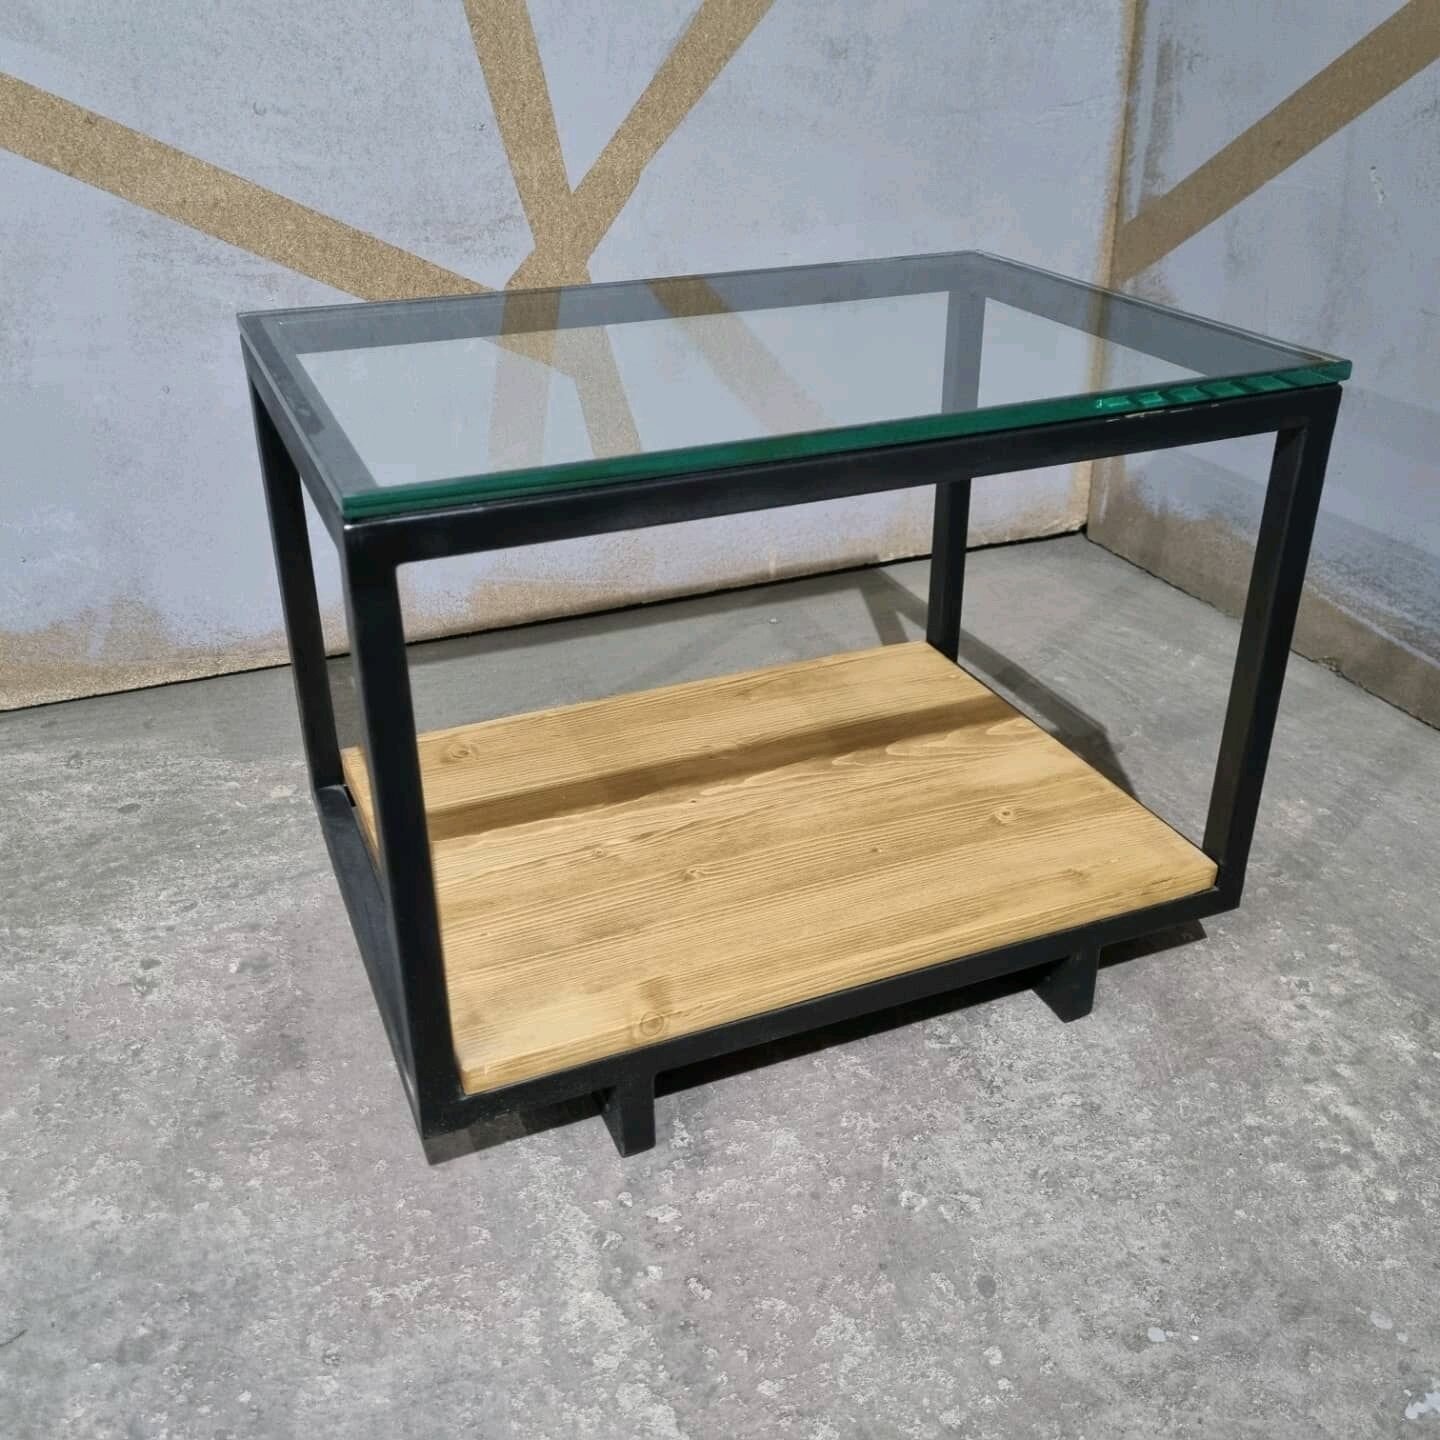 Журнальный столик, coffee table - 07, с размерами 40х40х60 см